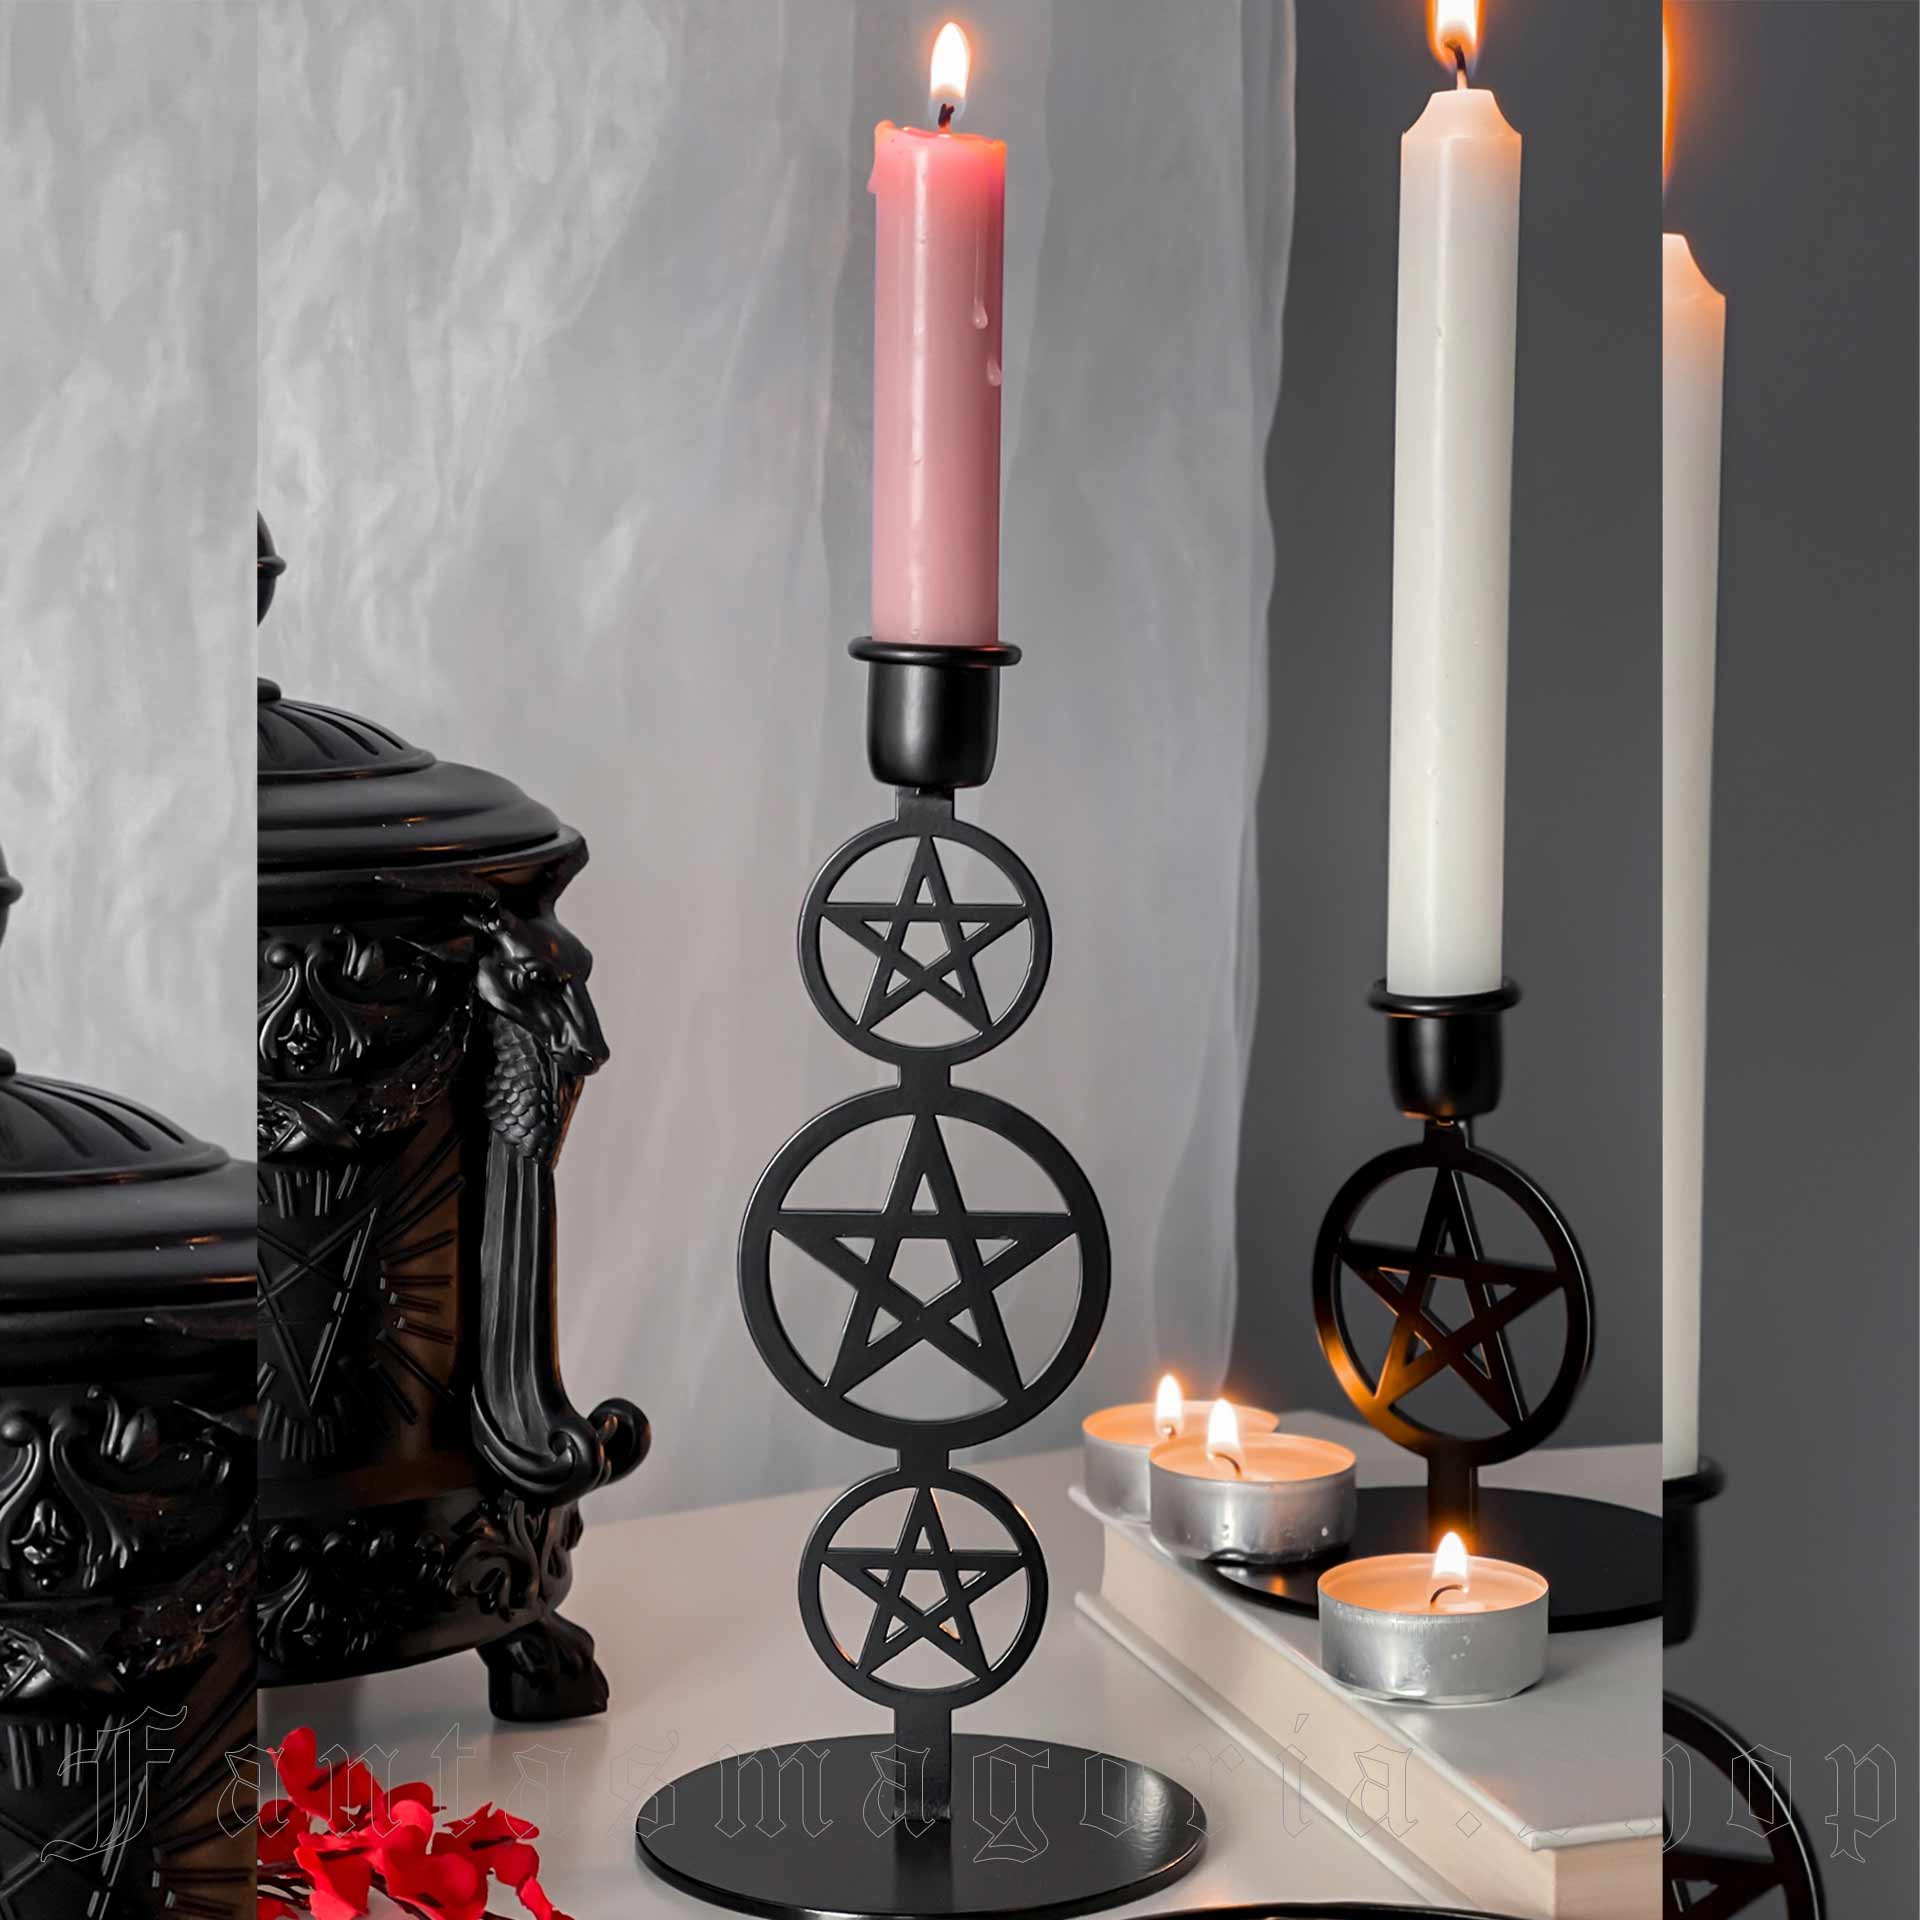 Pentagram Medium Candlestick Holder